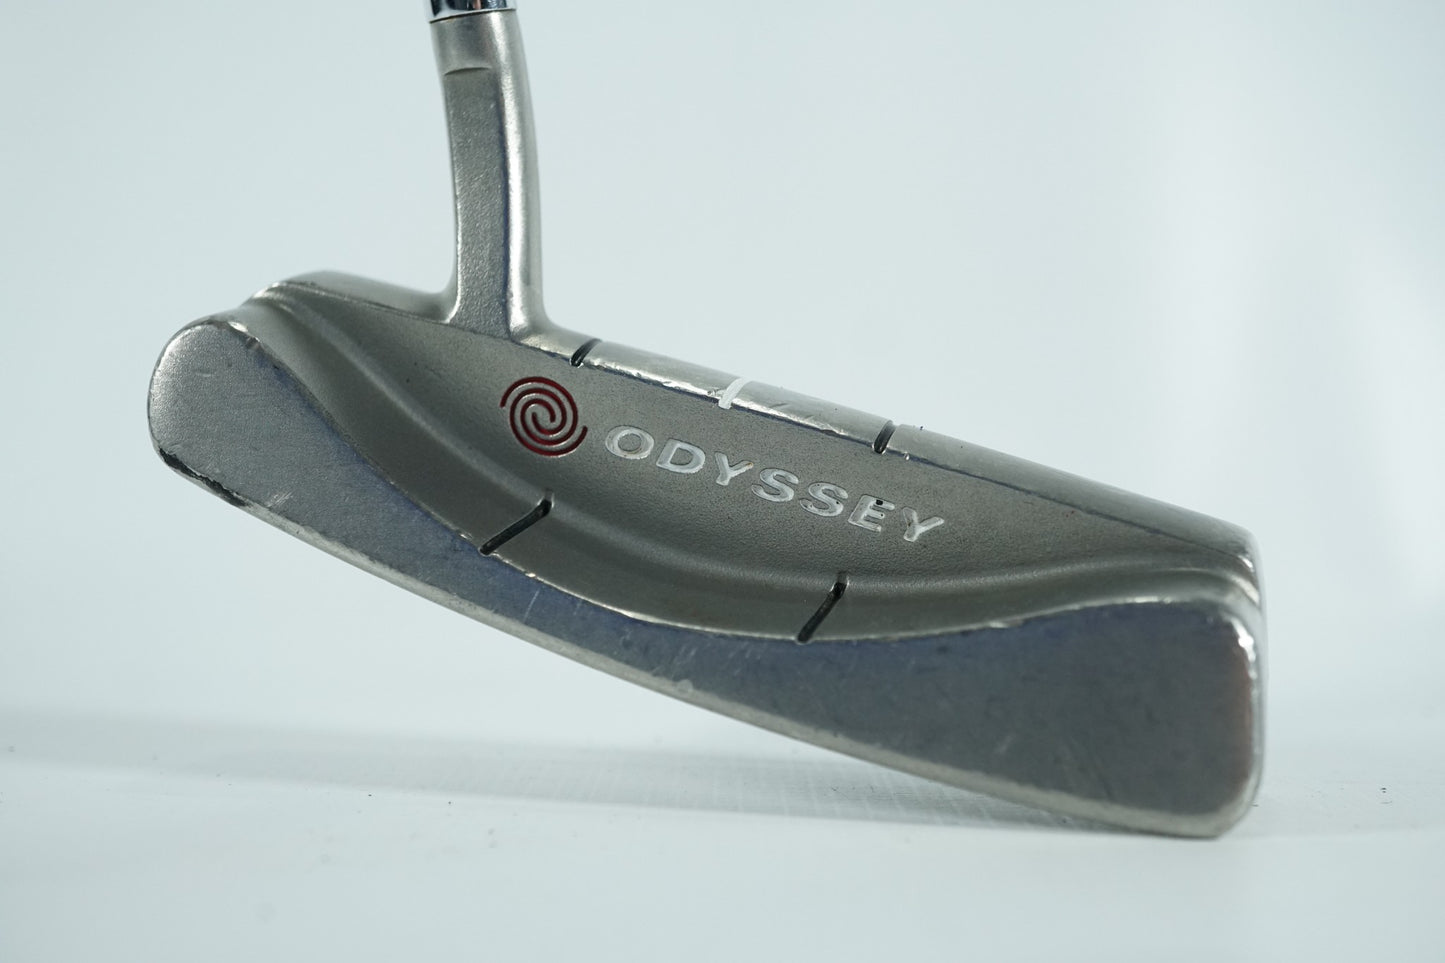 Odyssey White Steel 2 Putter / New Grip / 35.5"